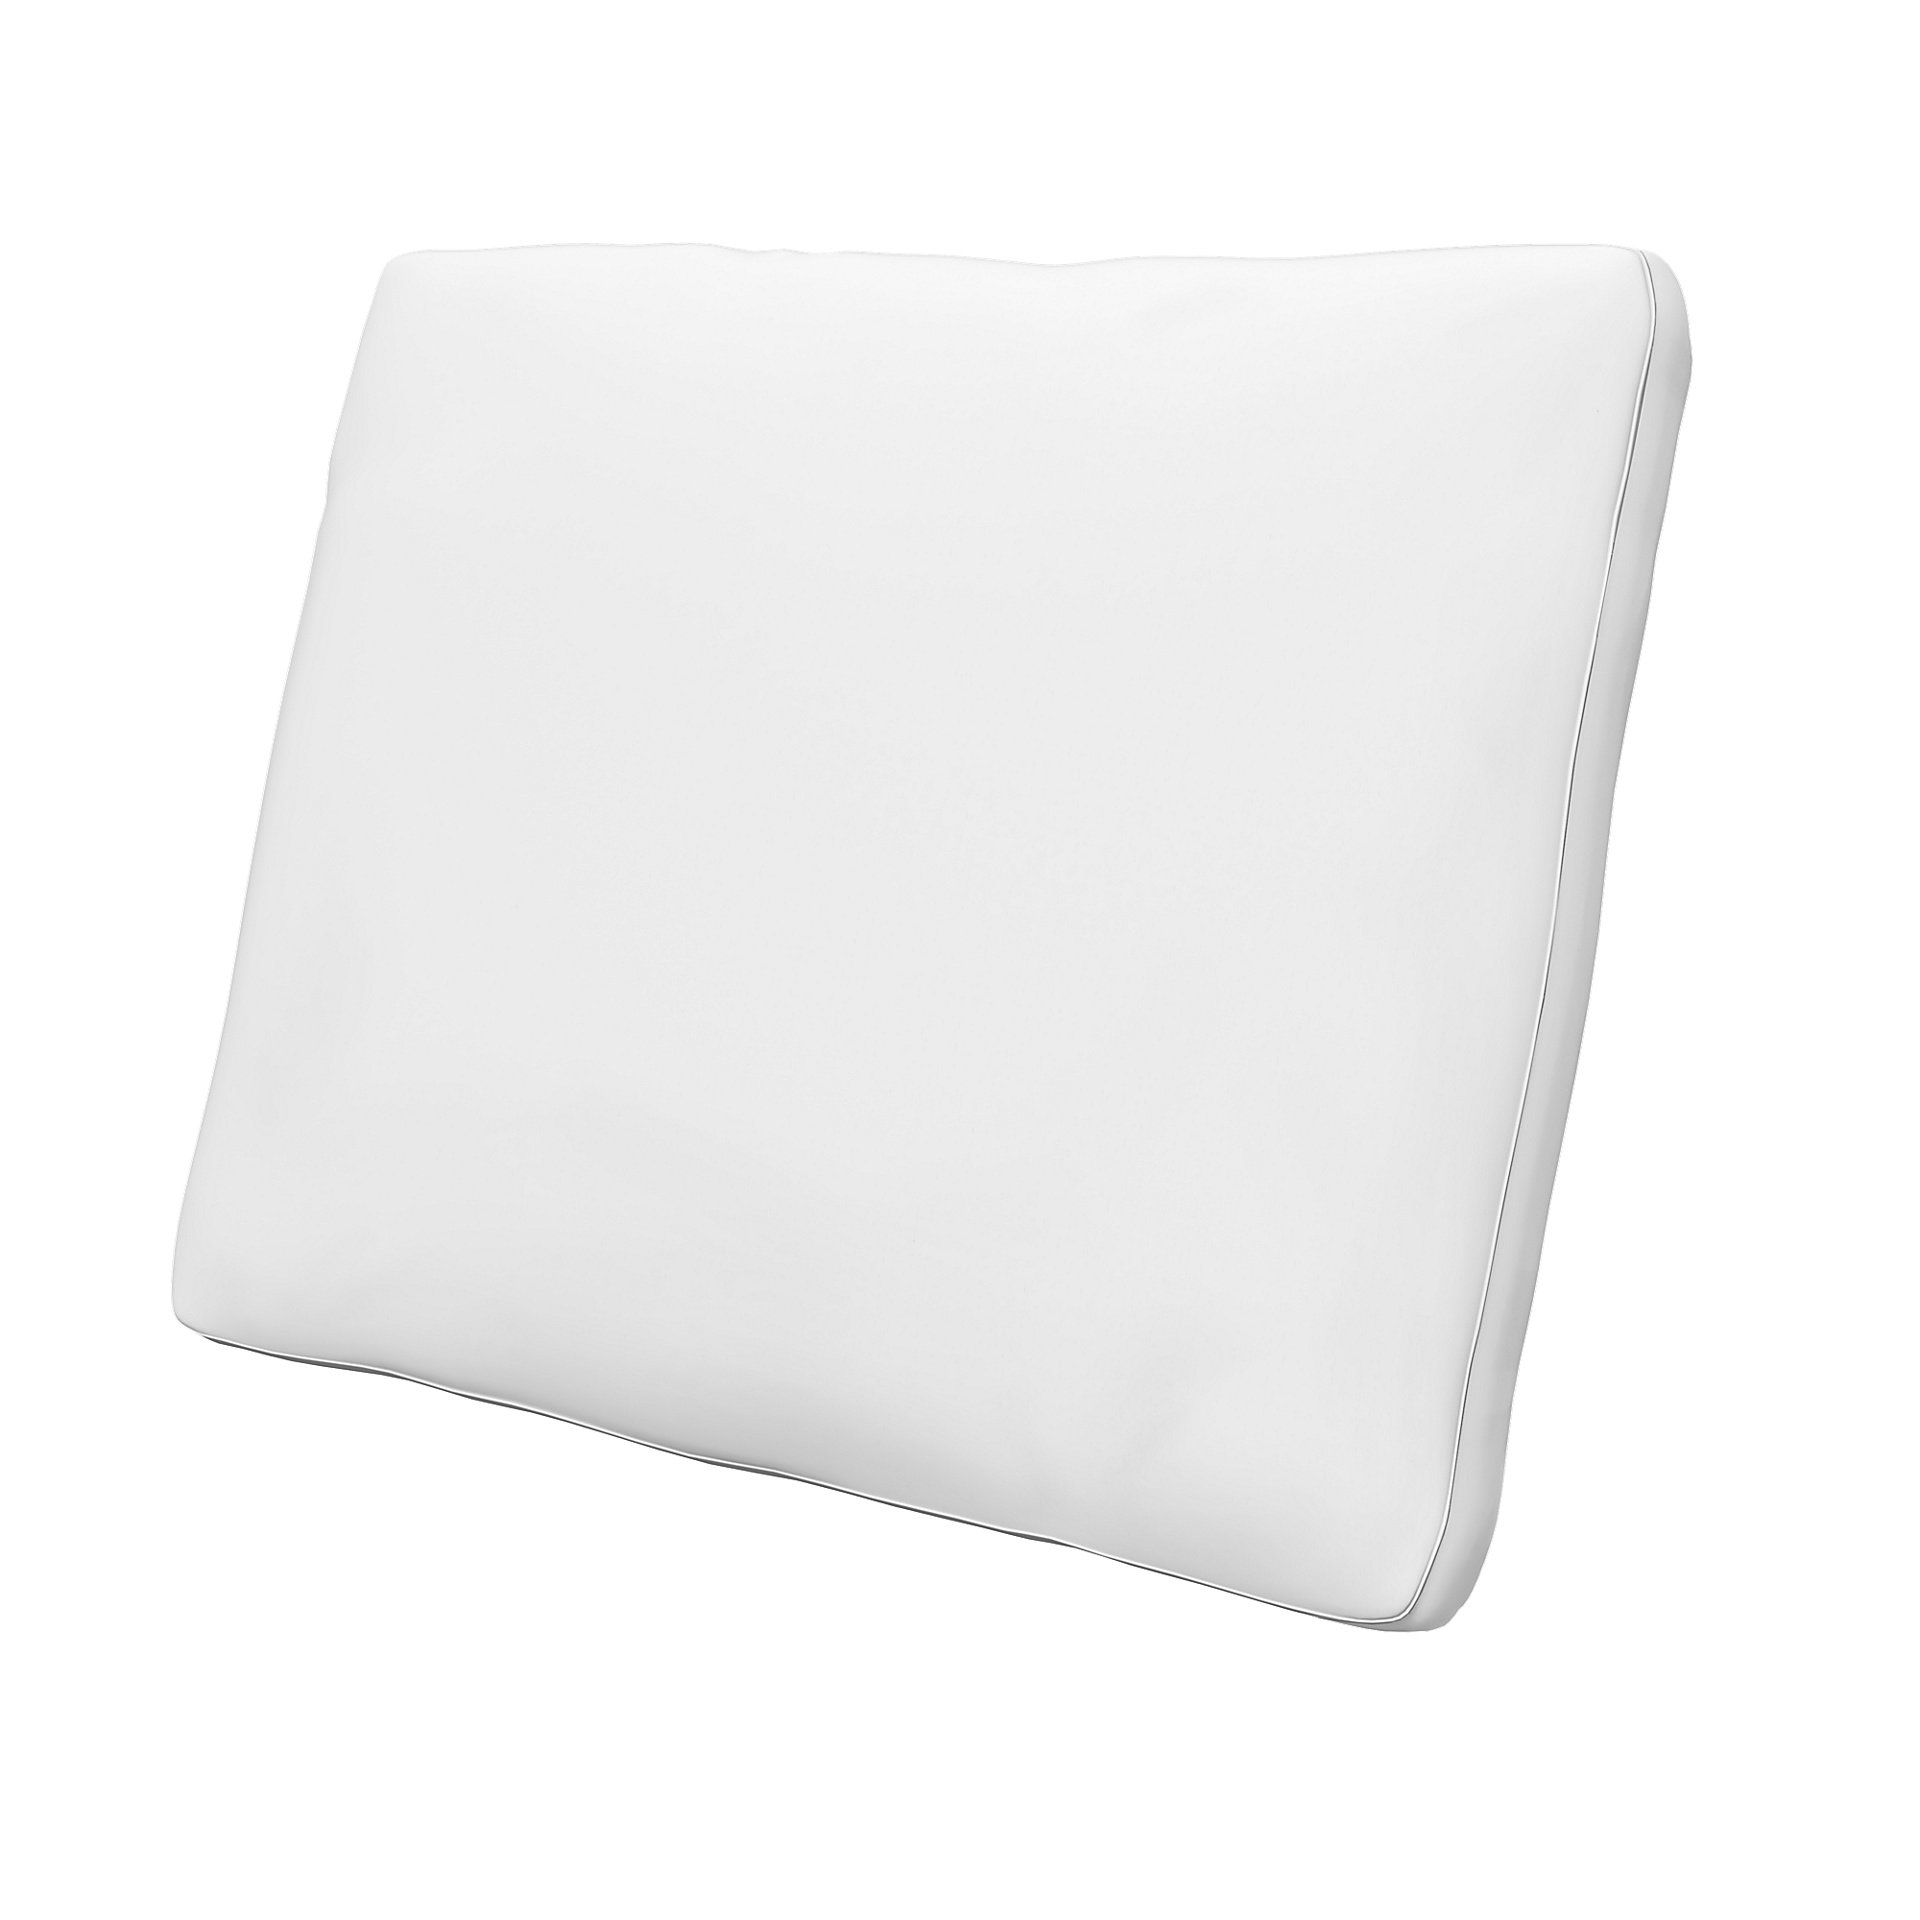 IKEA - Cushion Cover Karlstad 58x48x5 cm, Absolute White, Linen - Bemz